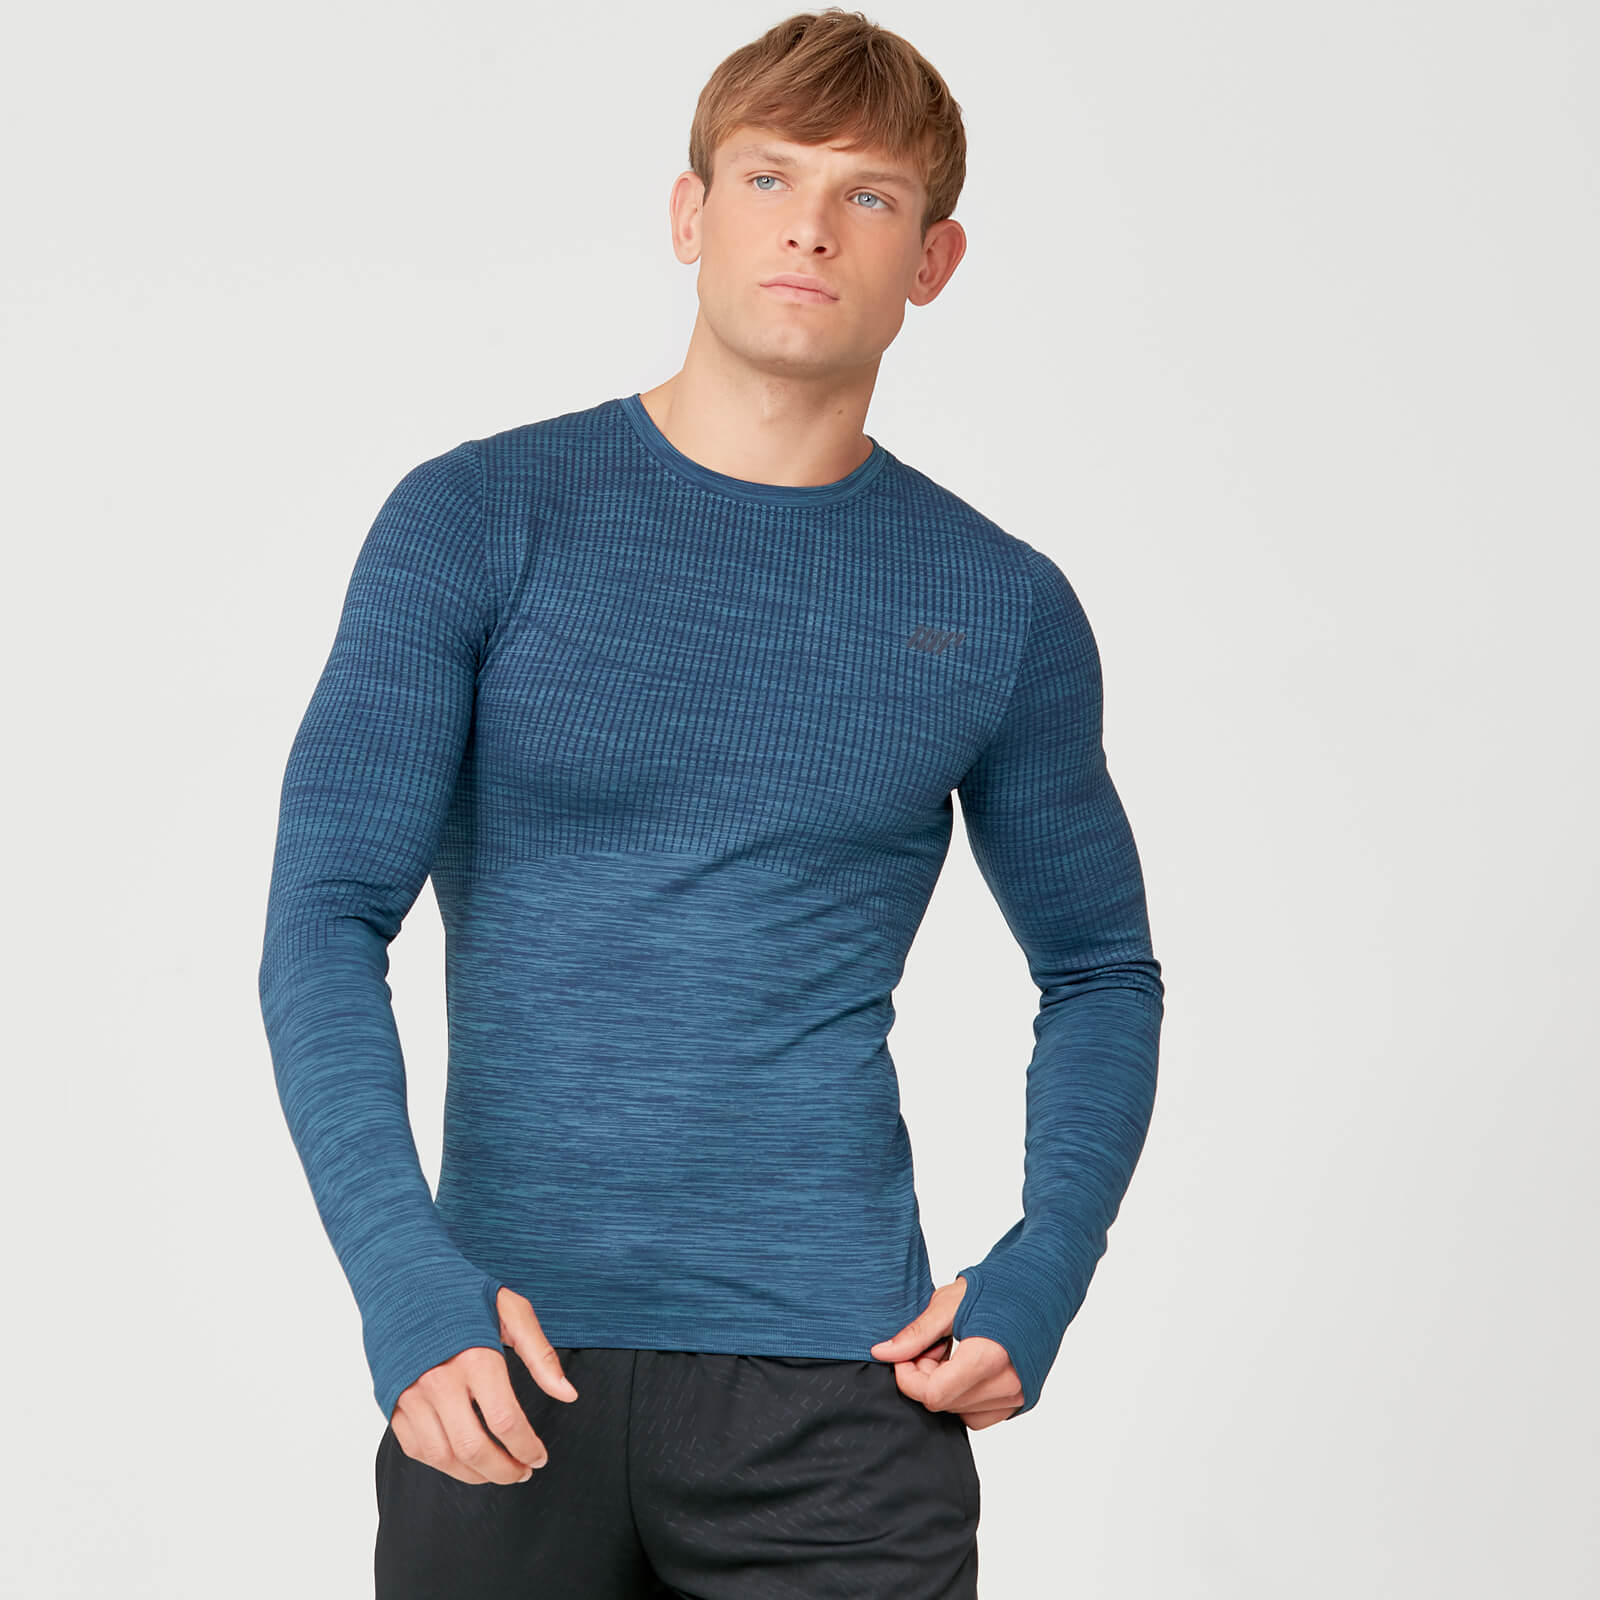 Seamless 無縫系列 男士雕塑長袖衫 - 灰藍 - XS